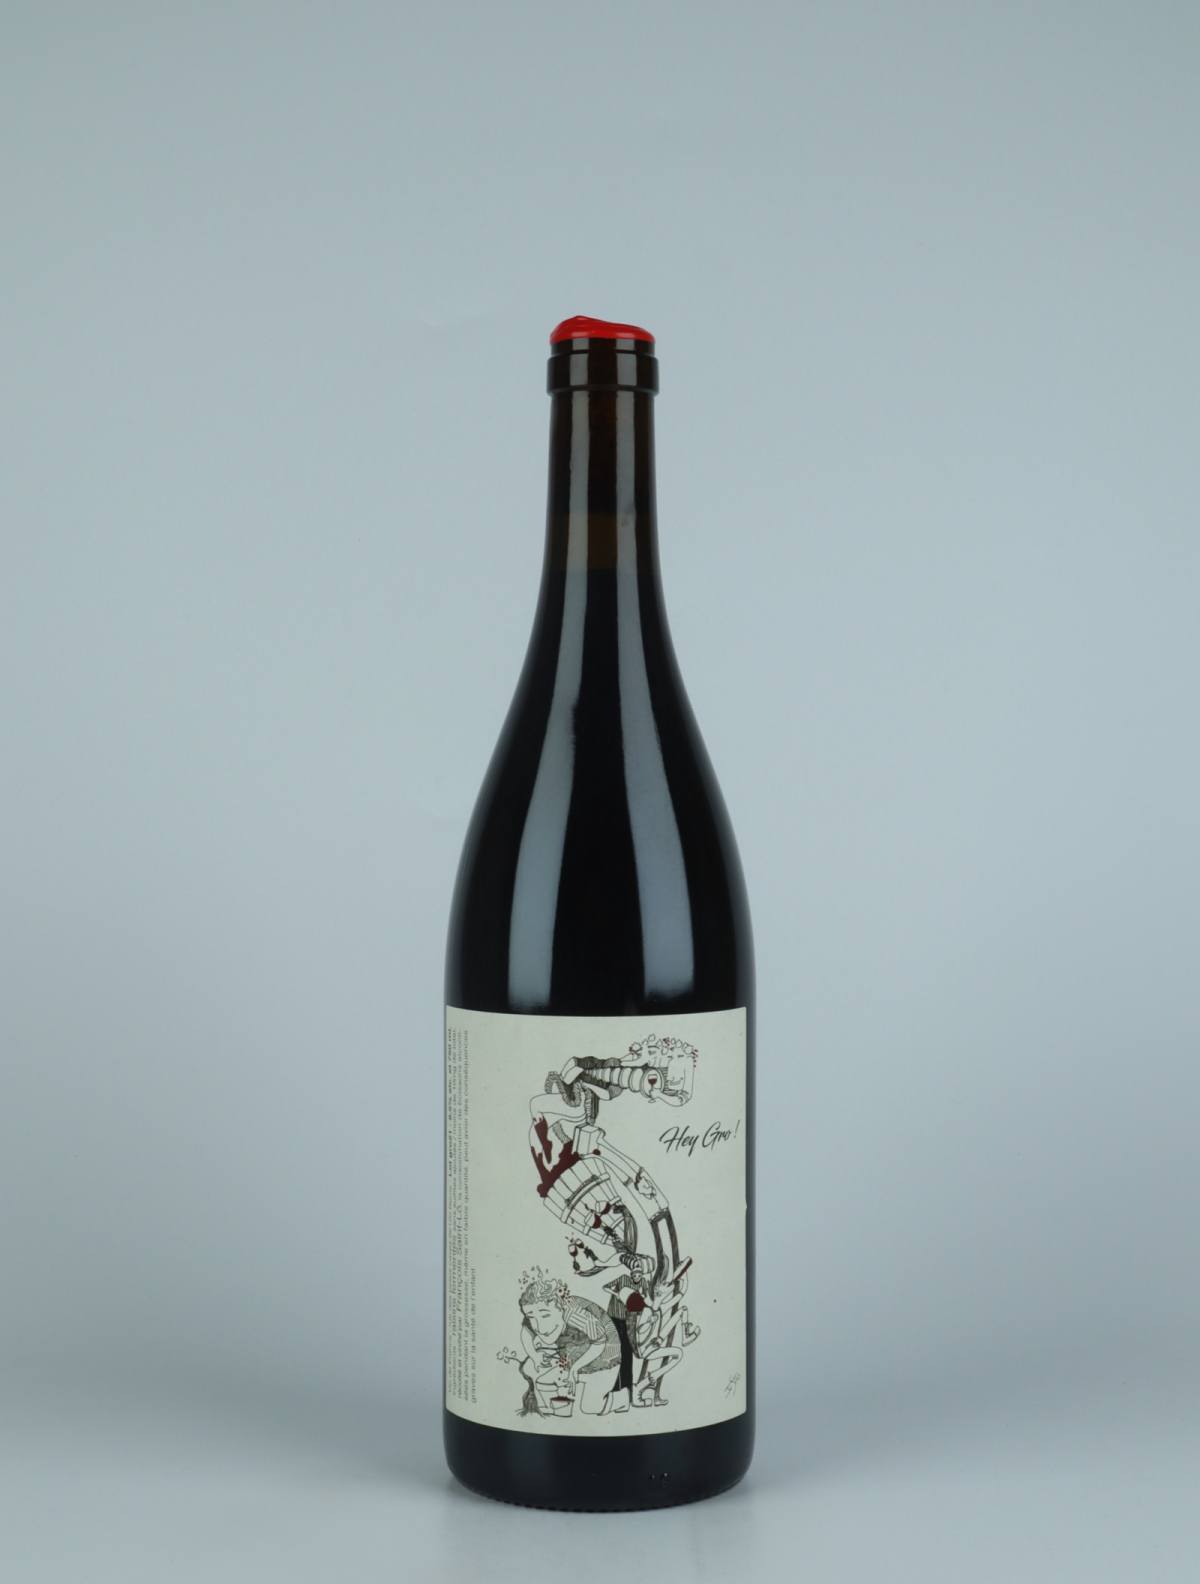 A bottle 2021 Hey Gro!!! Red wine from François Saint-Lô, Loire in France